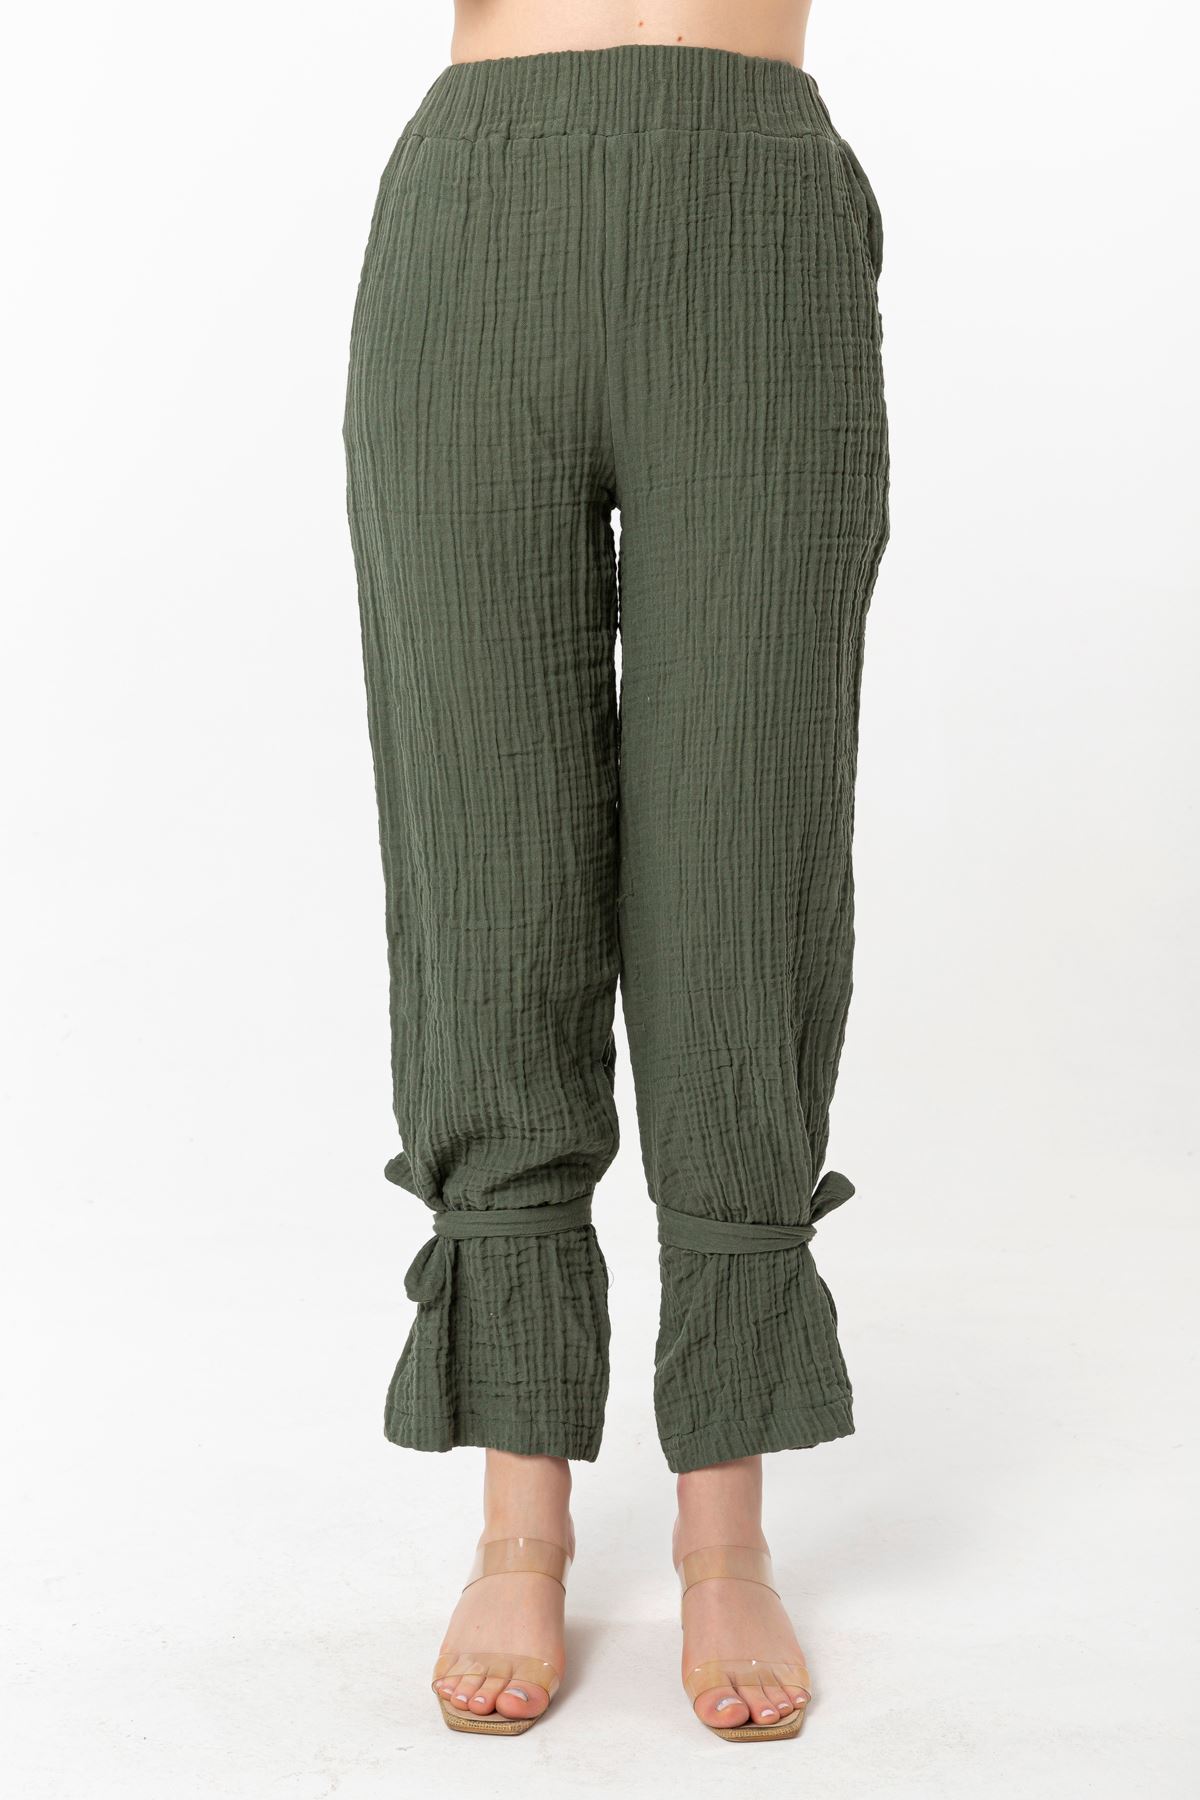 Muslin Fabric Comfy Fit Crepe Hems Women'S Trouser - Khaki 